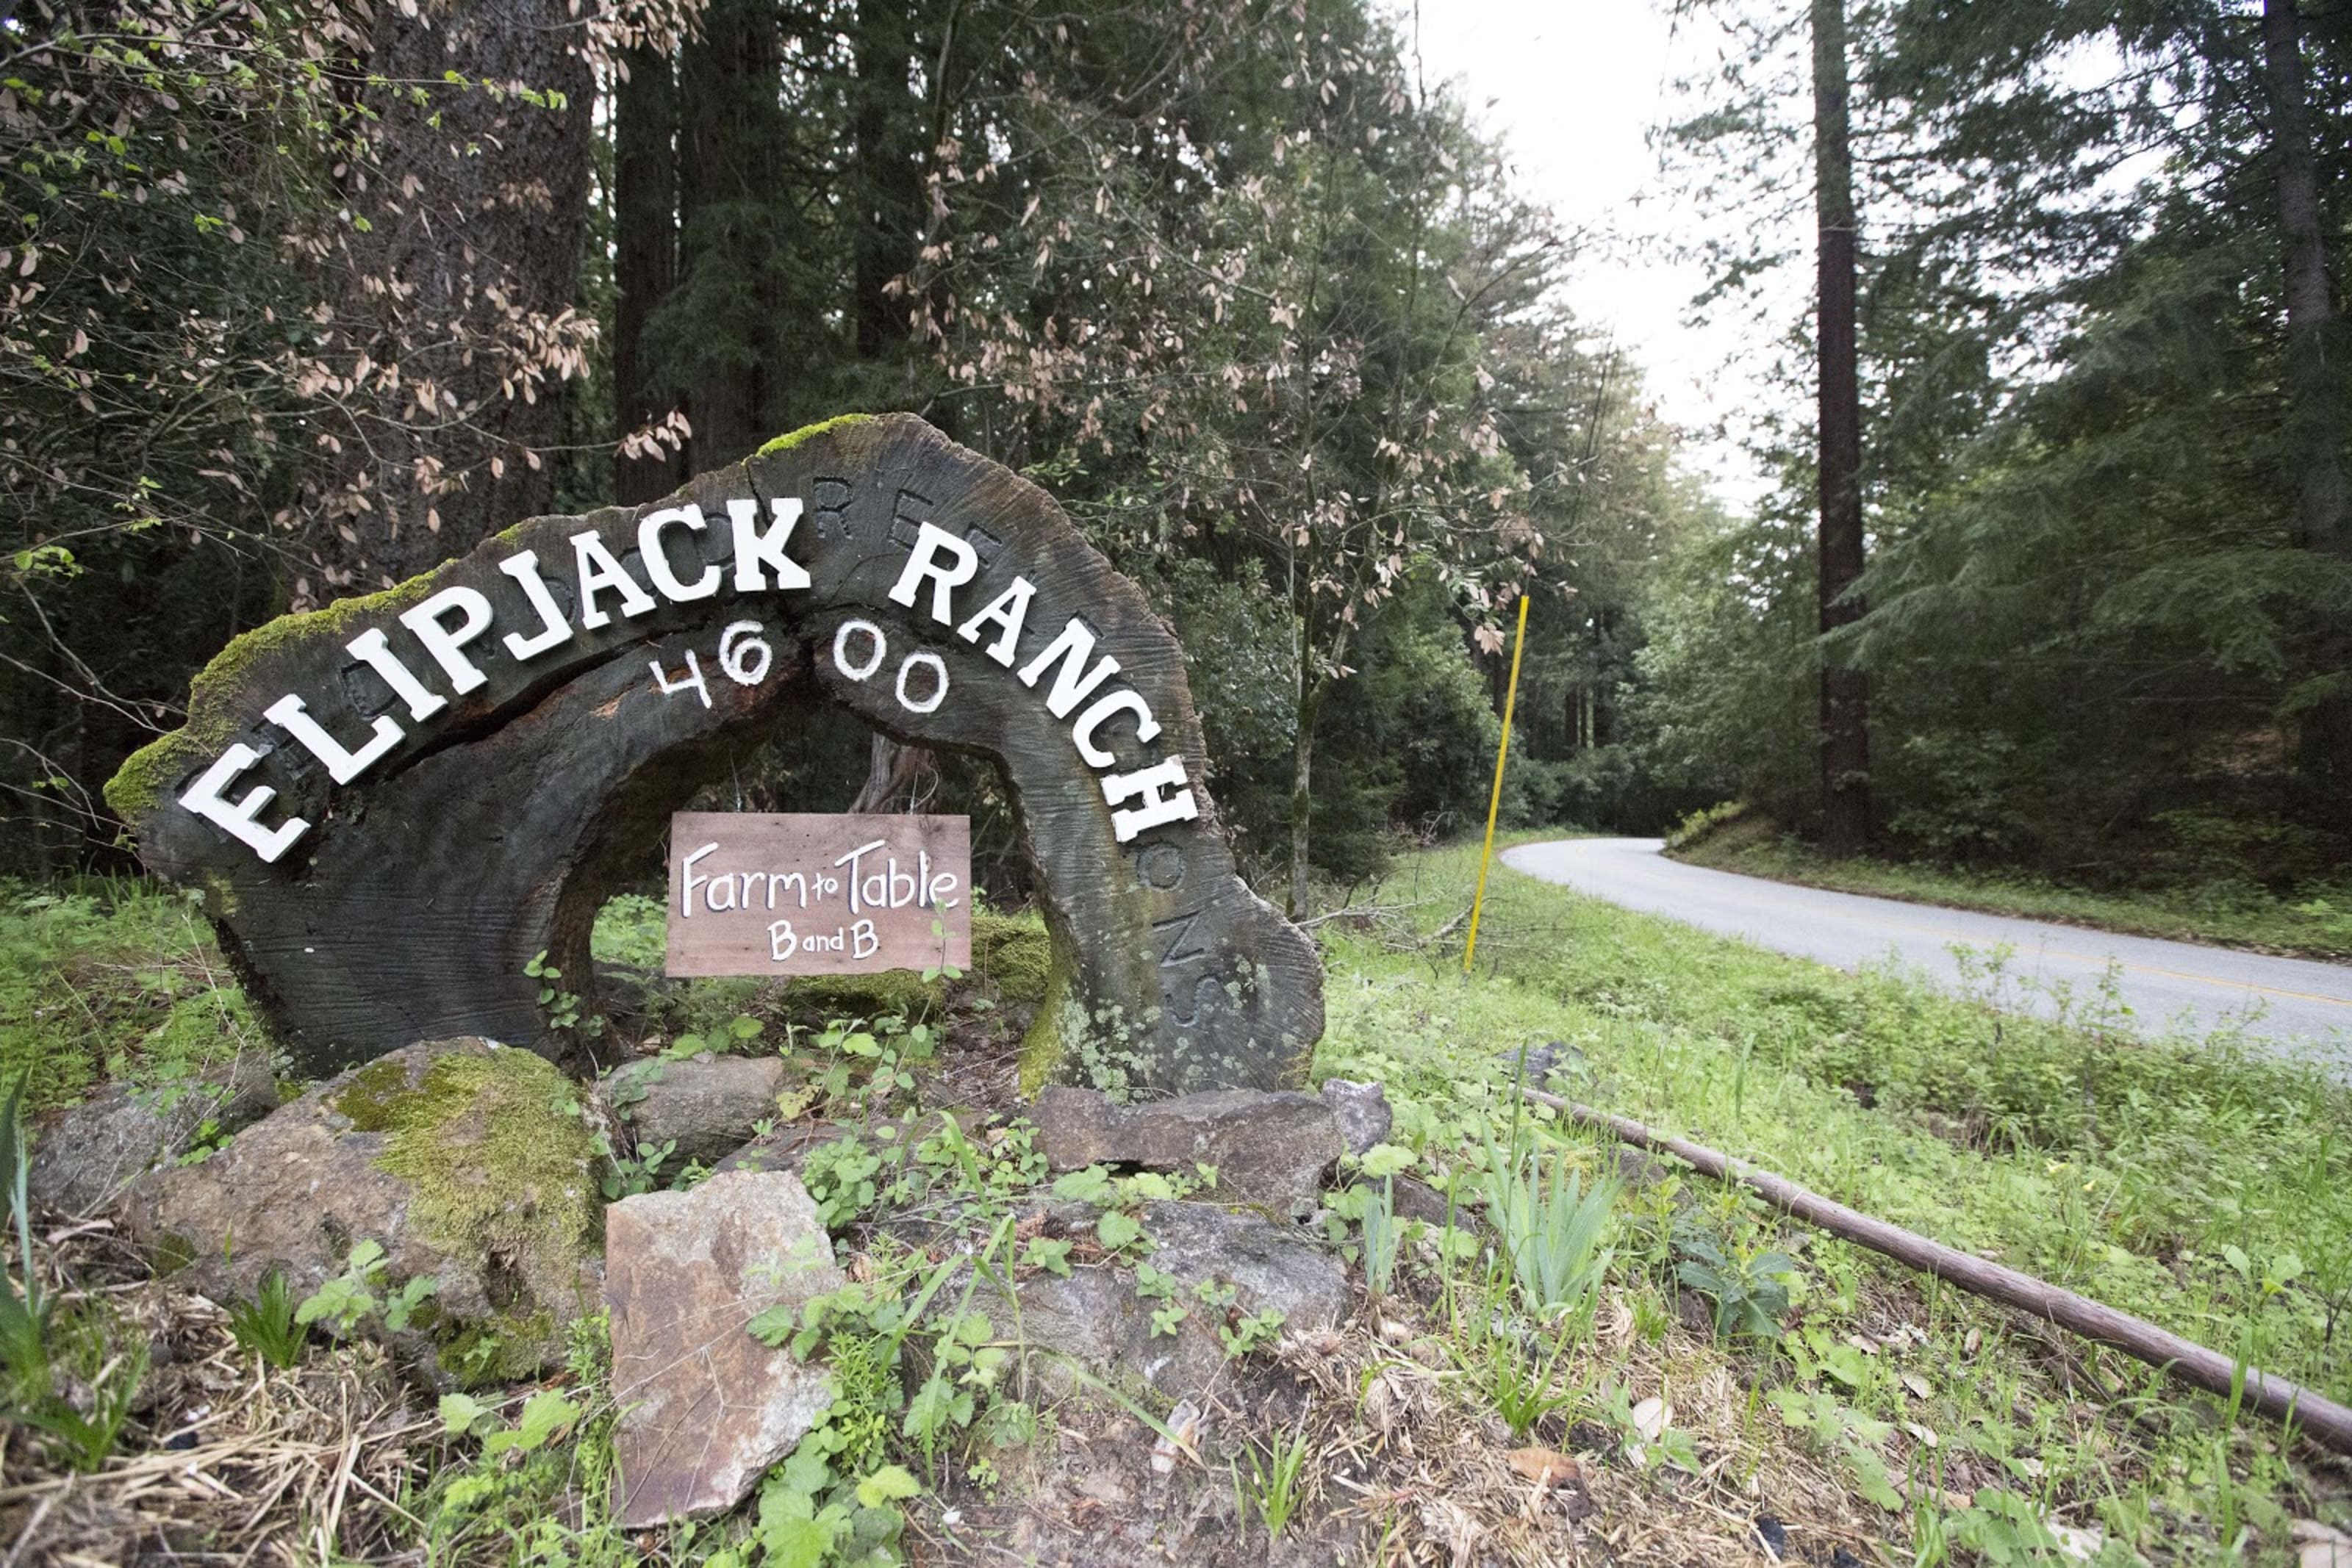 FlipJack Ranch Farm Stay in Santa Cruz Mountains